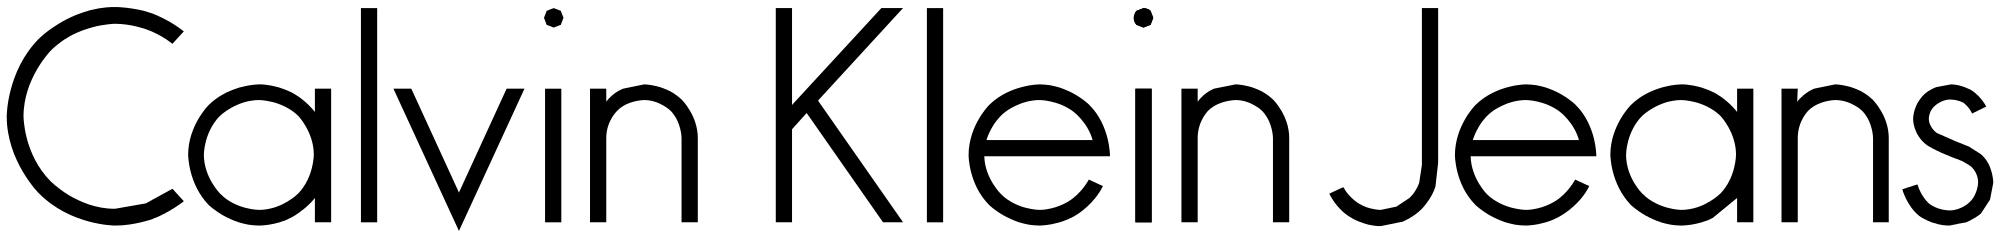 Calvin Klein Jeans Logo - LogoDix